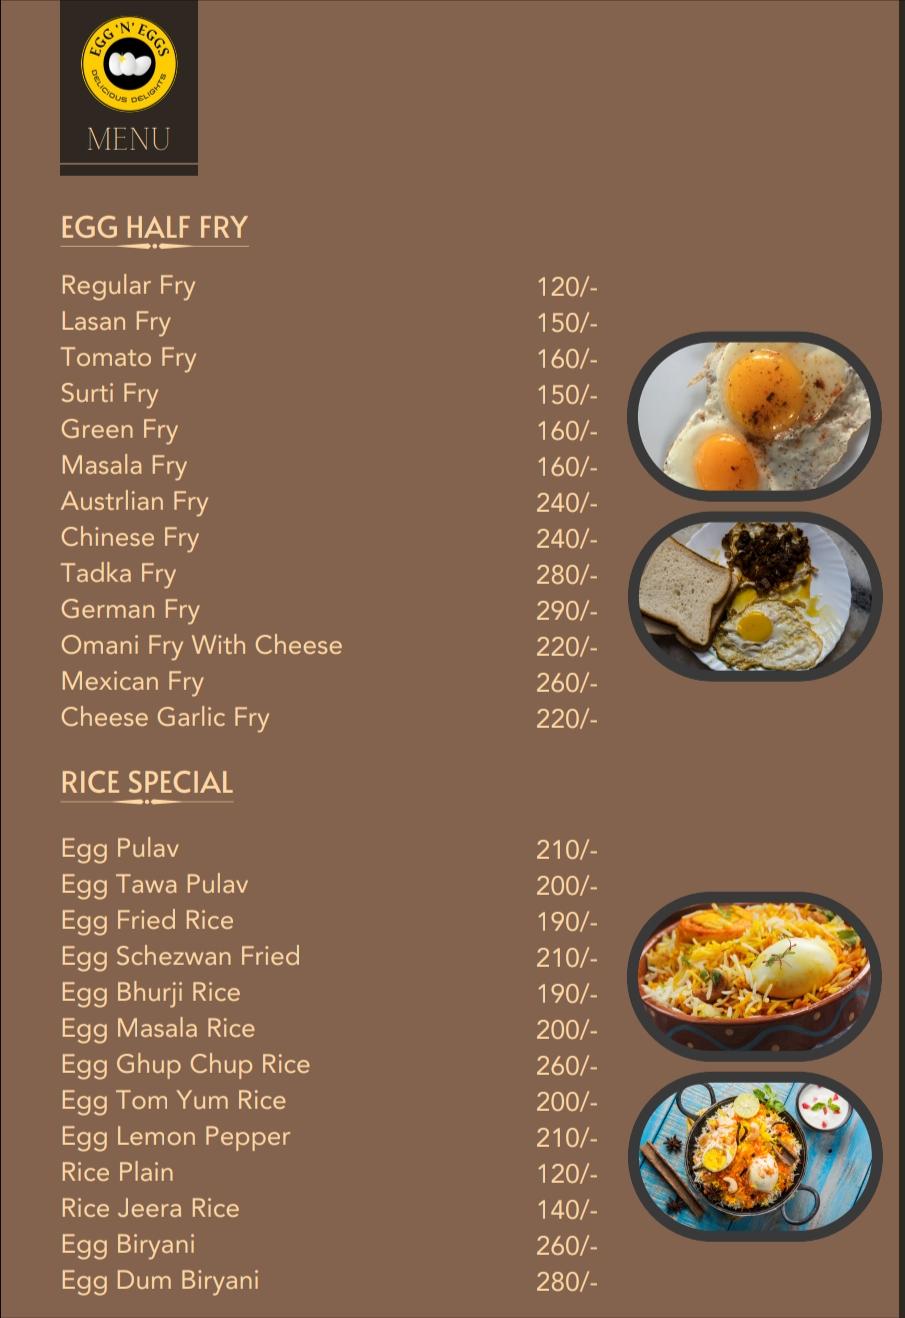 Egg 'N' Eggs / Chicken Basket - Chala